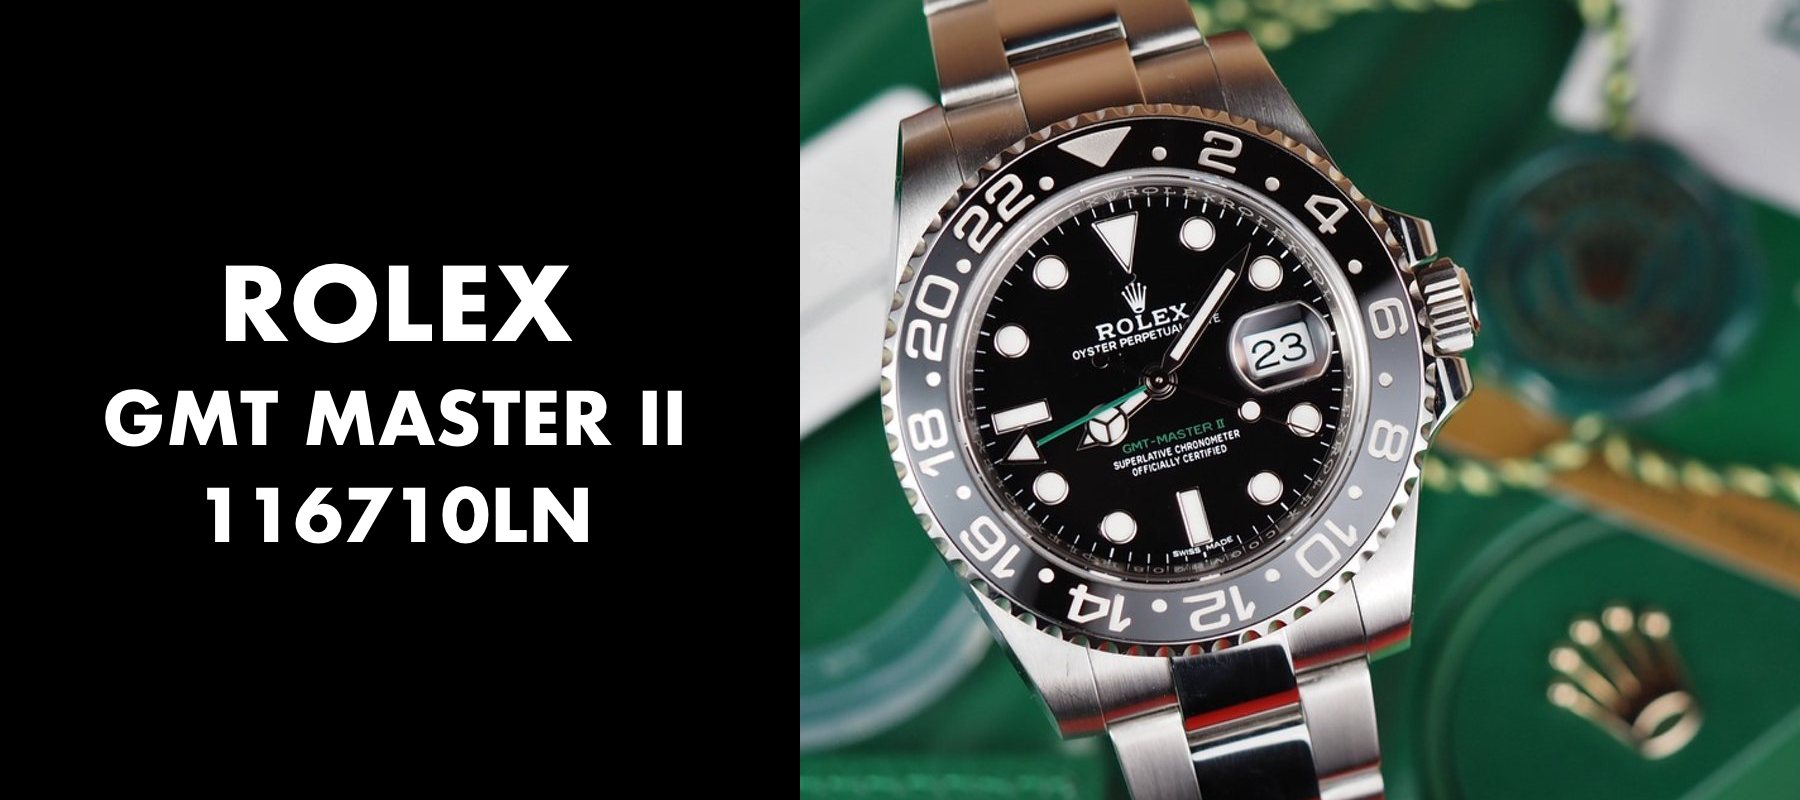 Rolex GMT Master II 116710LN - History